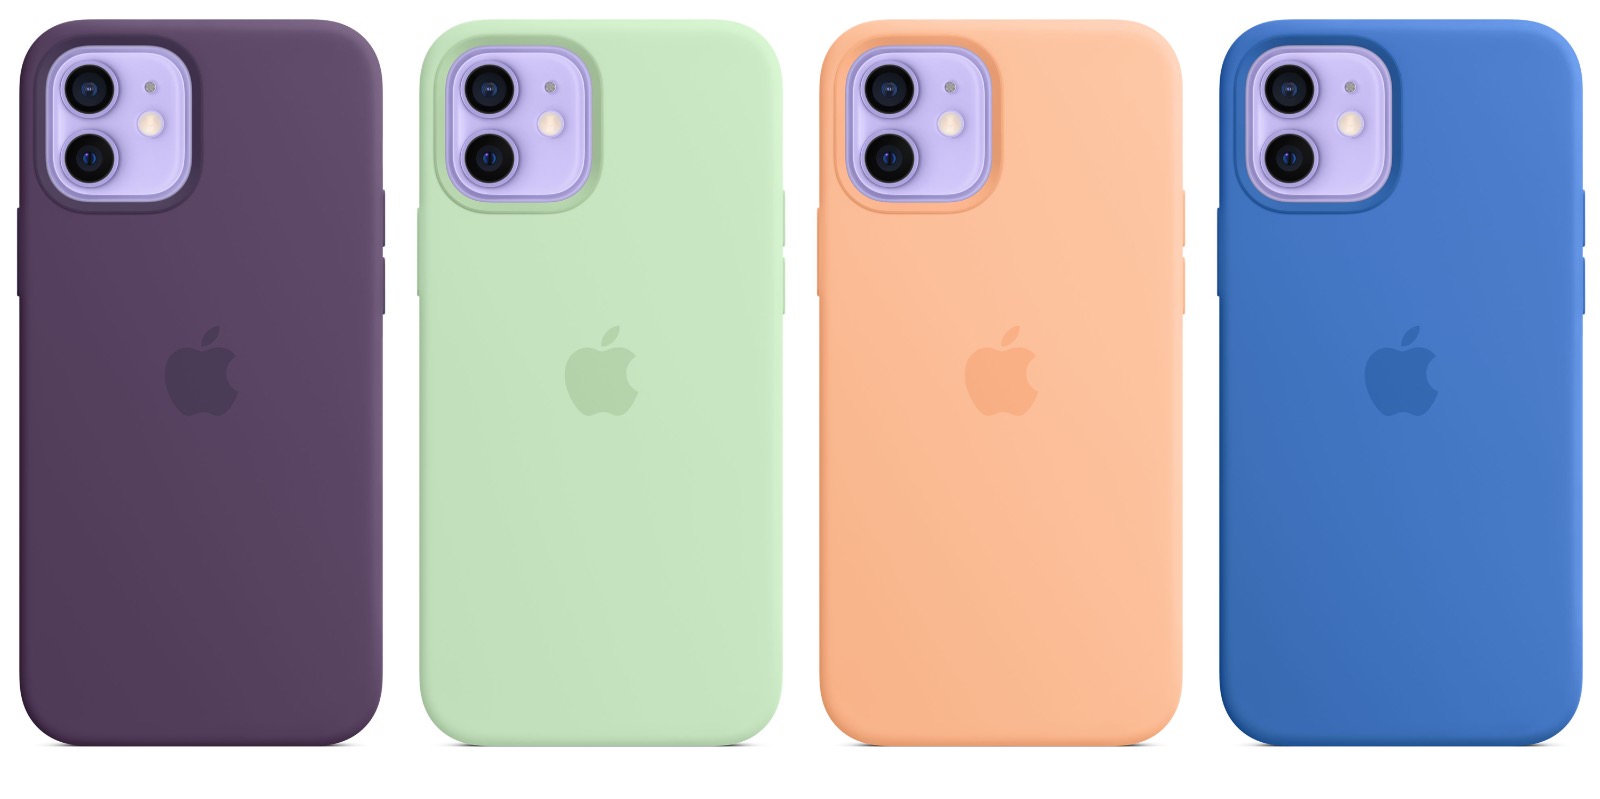 New iPhone12 cases